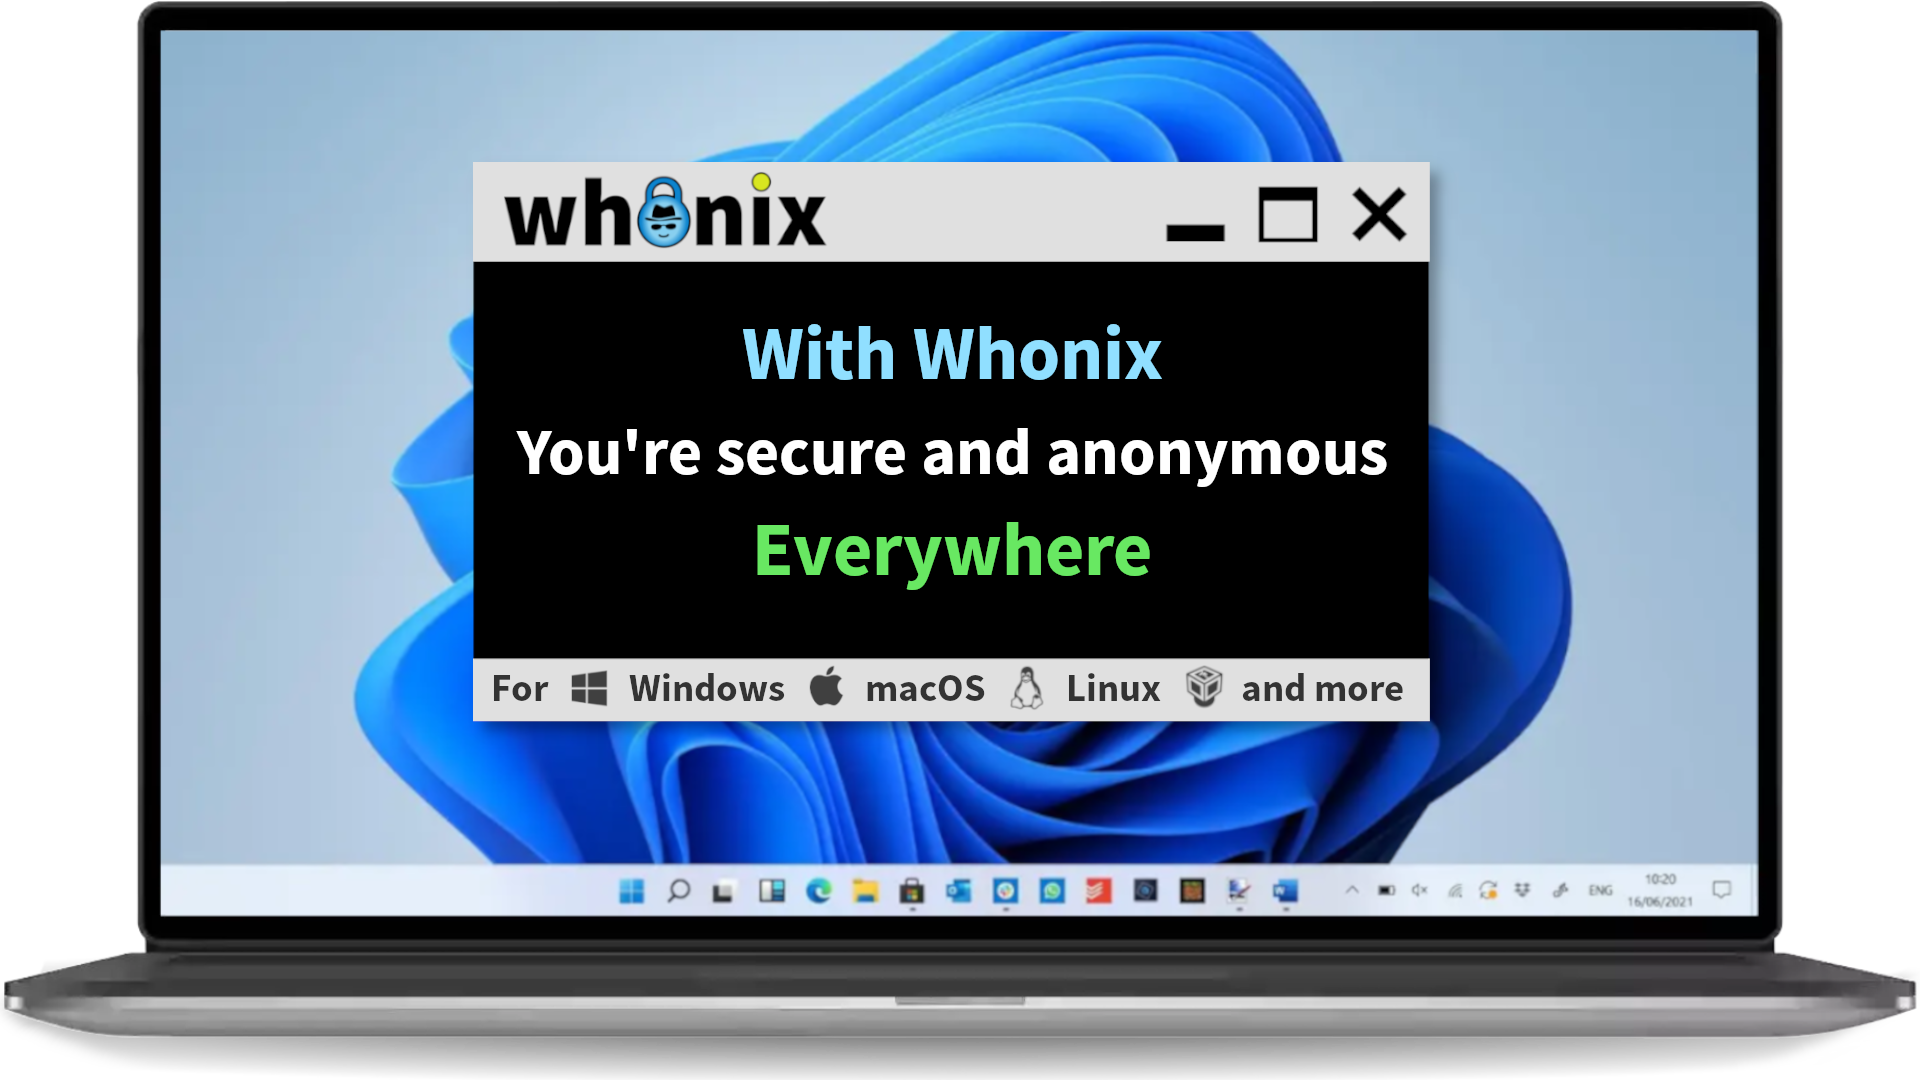 Whonix-homepage-main.png